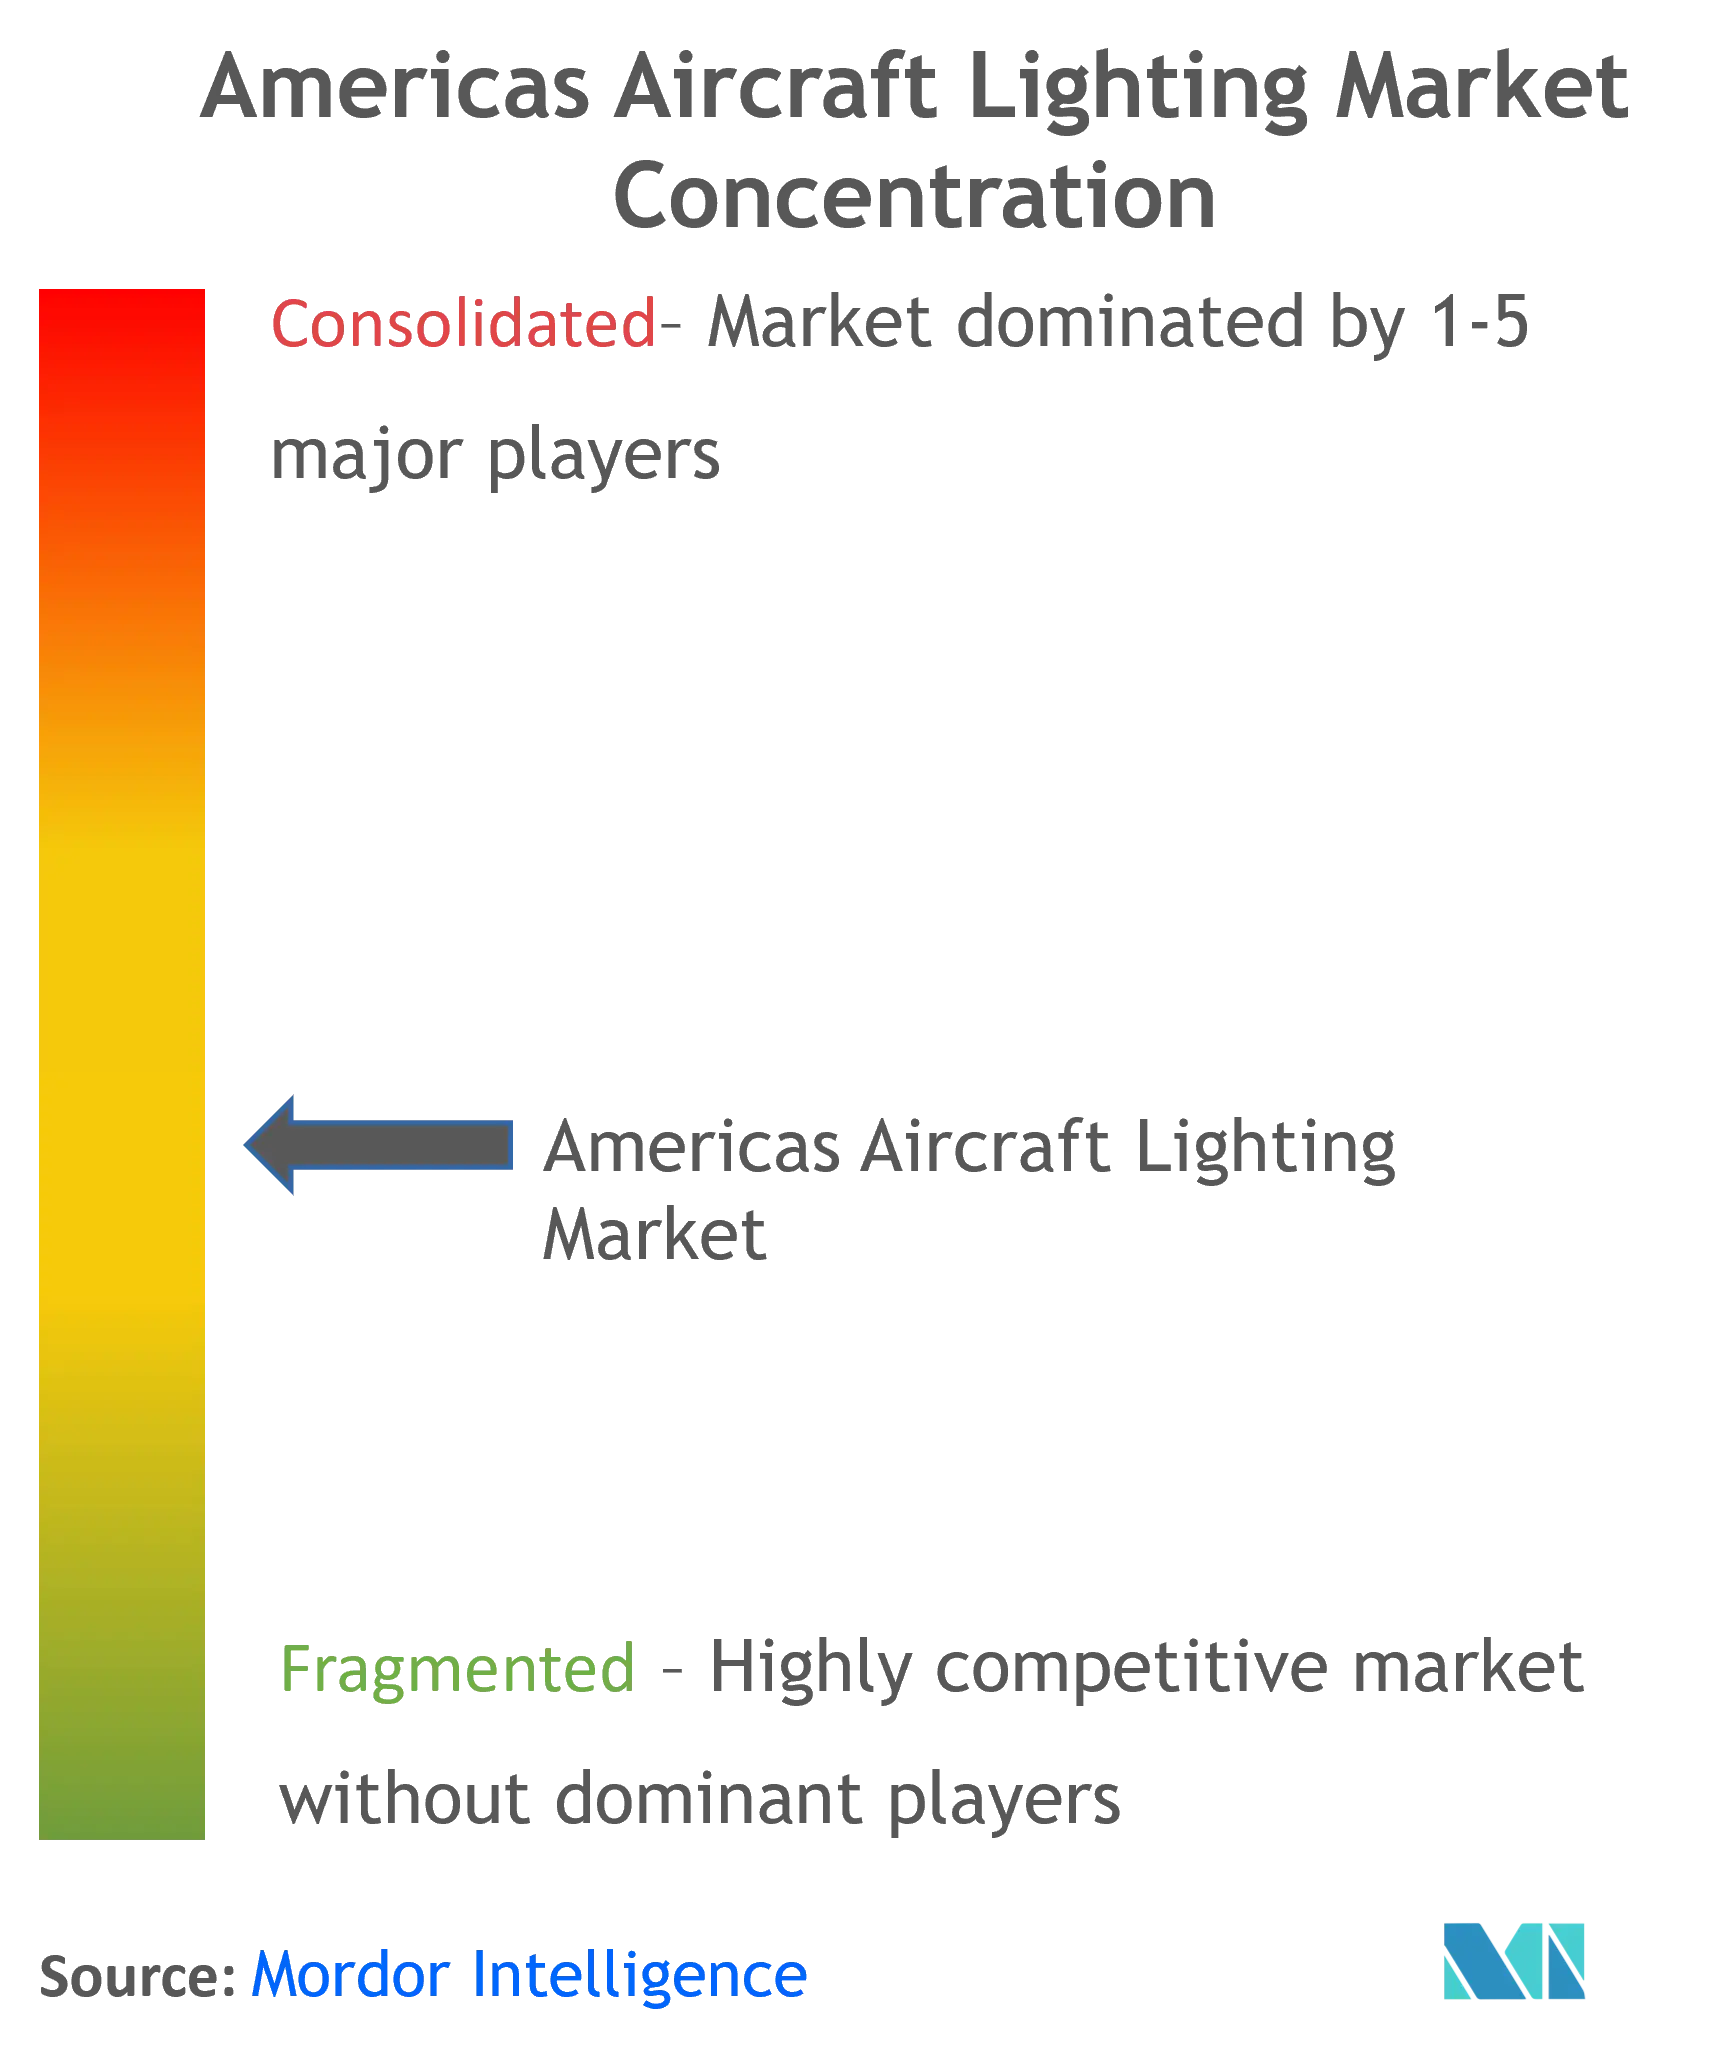 Americas Aircraft Lighting Market Concentration